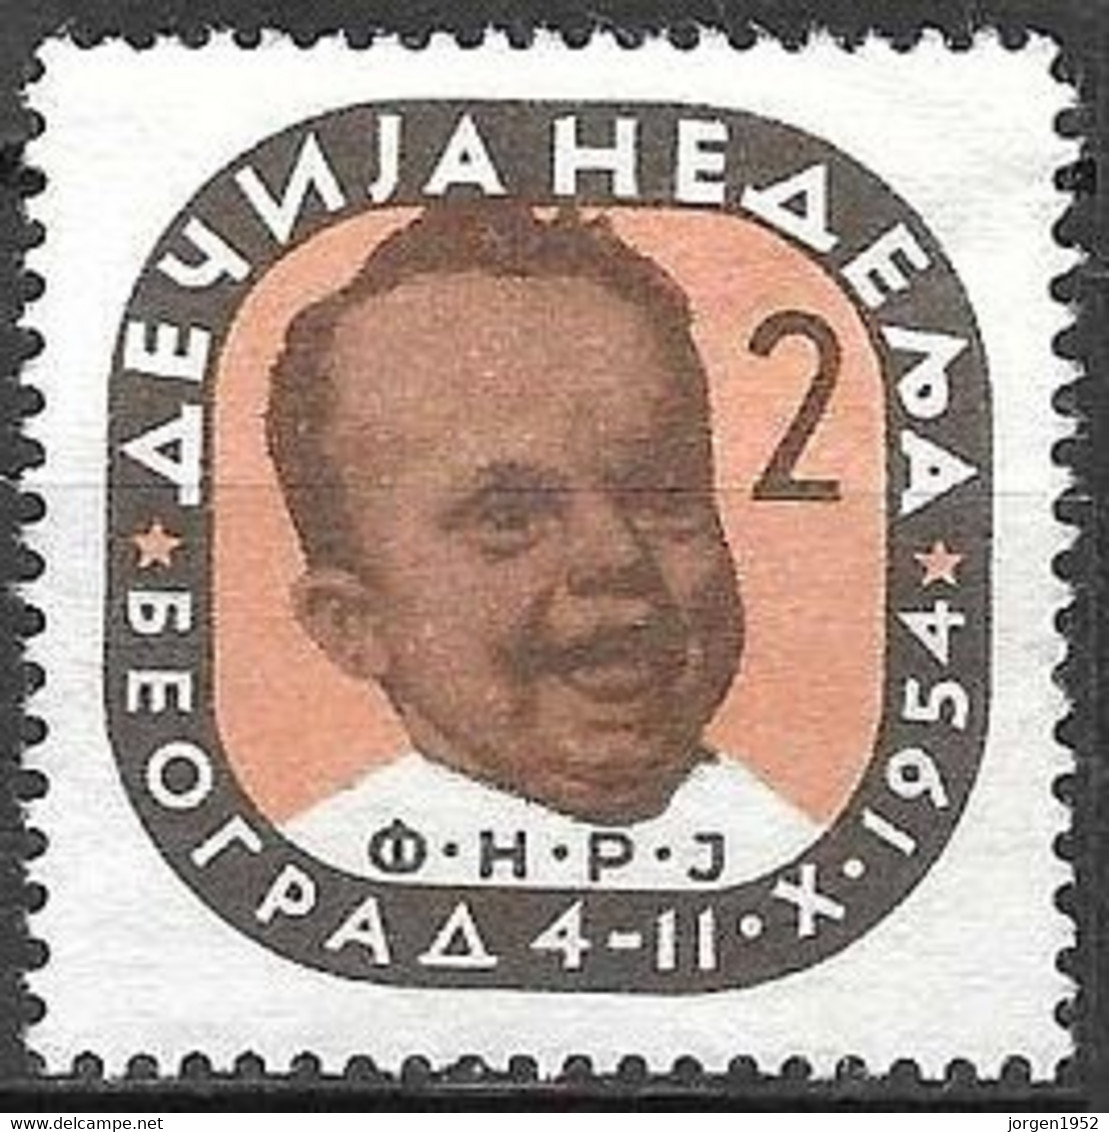 YUGOSLAVIA #  FROM 1954 MICHEL Z12 - Postage Due